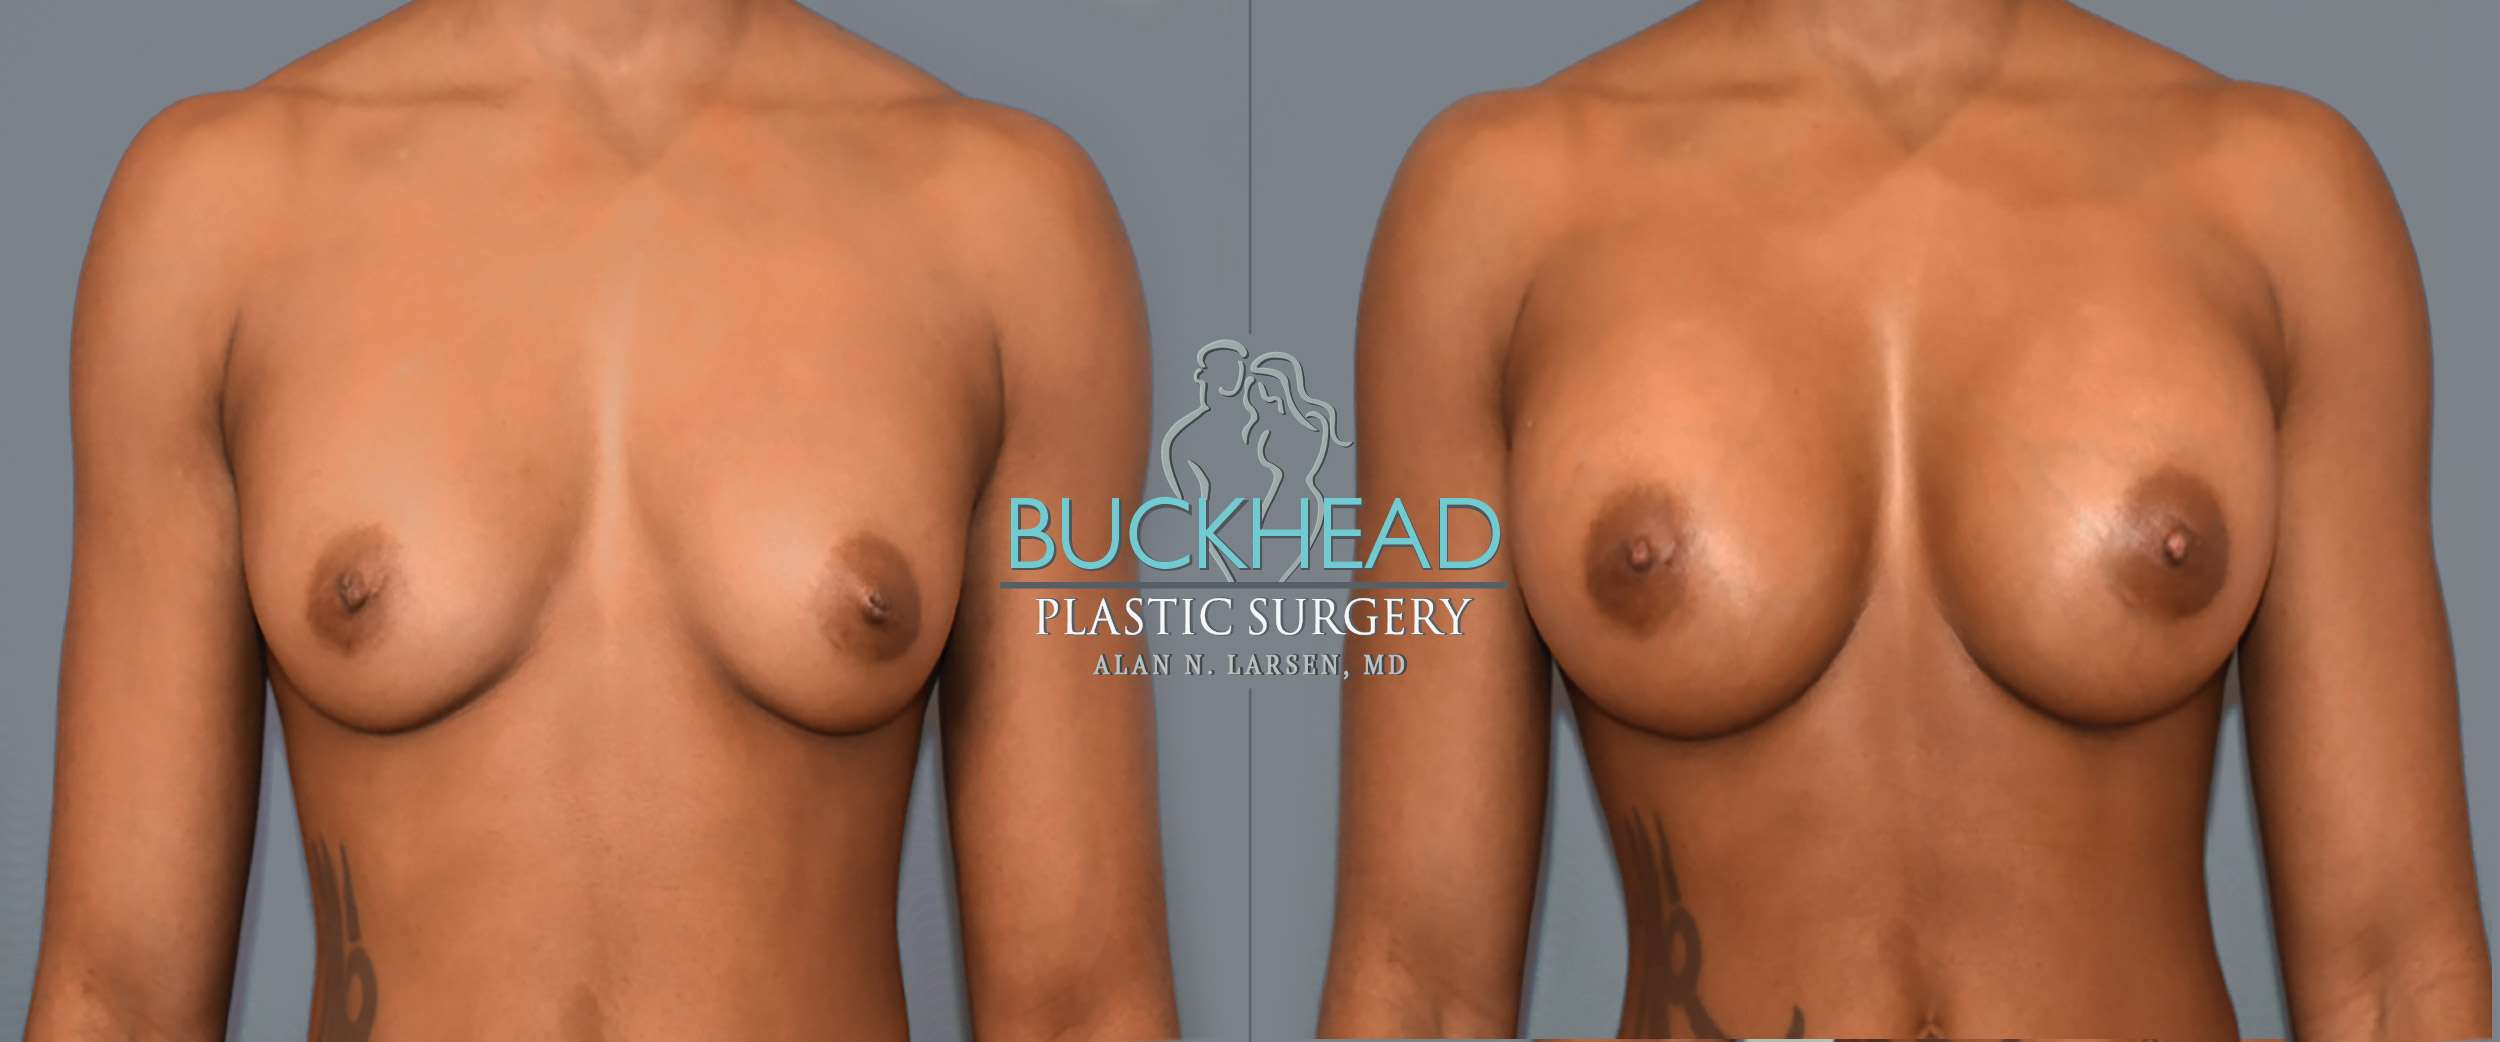 Before and After Photo Gallery | Breast Augmentation | Buckhead Plastic Surgery | Alan N. Larsen, MD | Board-Certified Plastic Surgeon in Atlanta GA